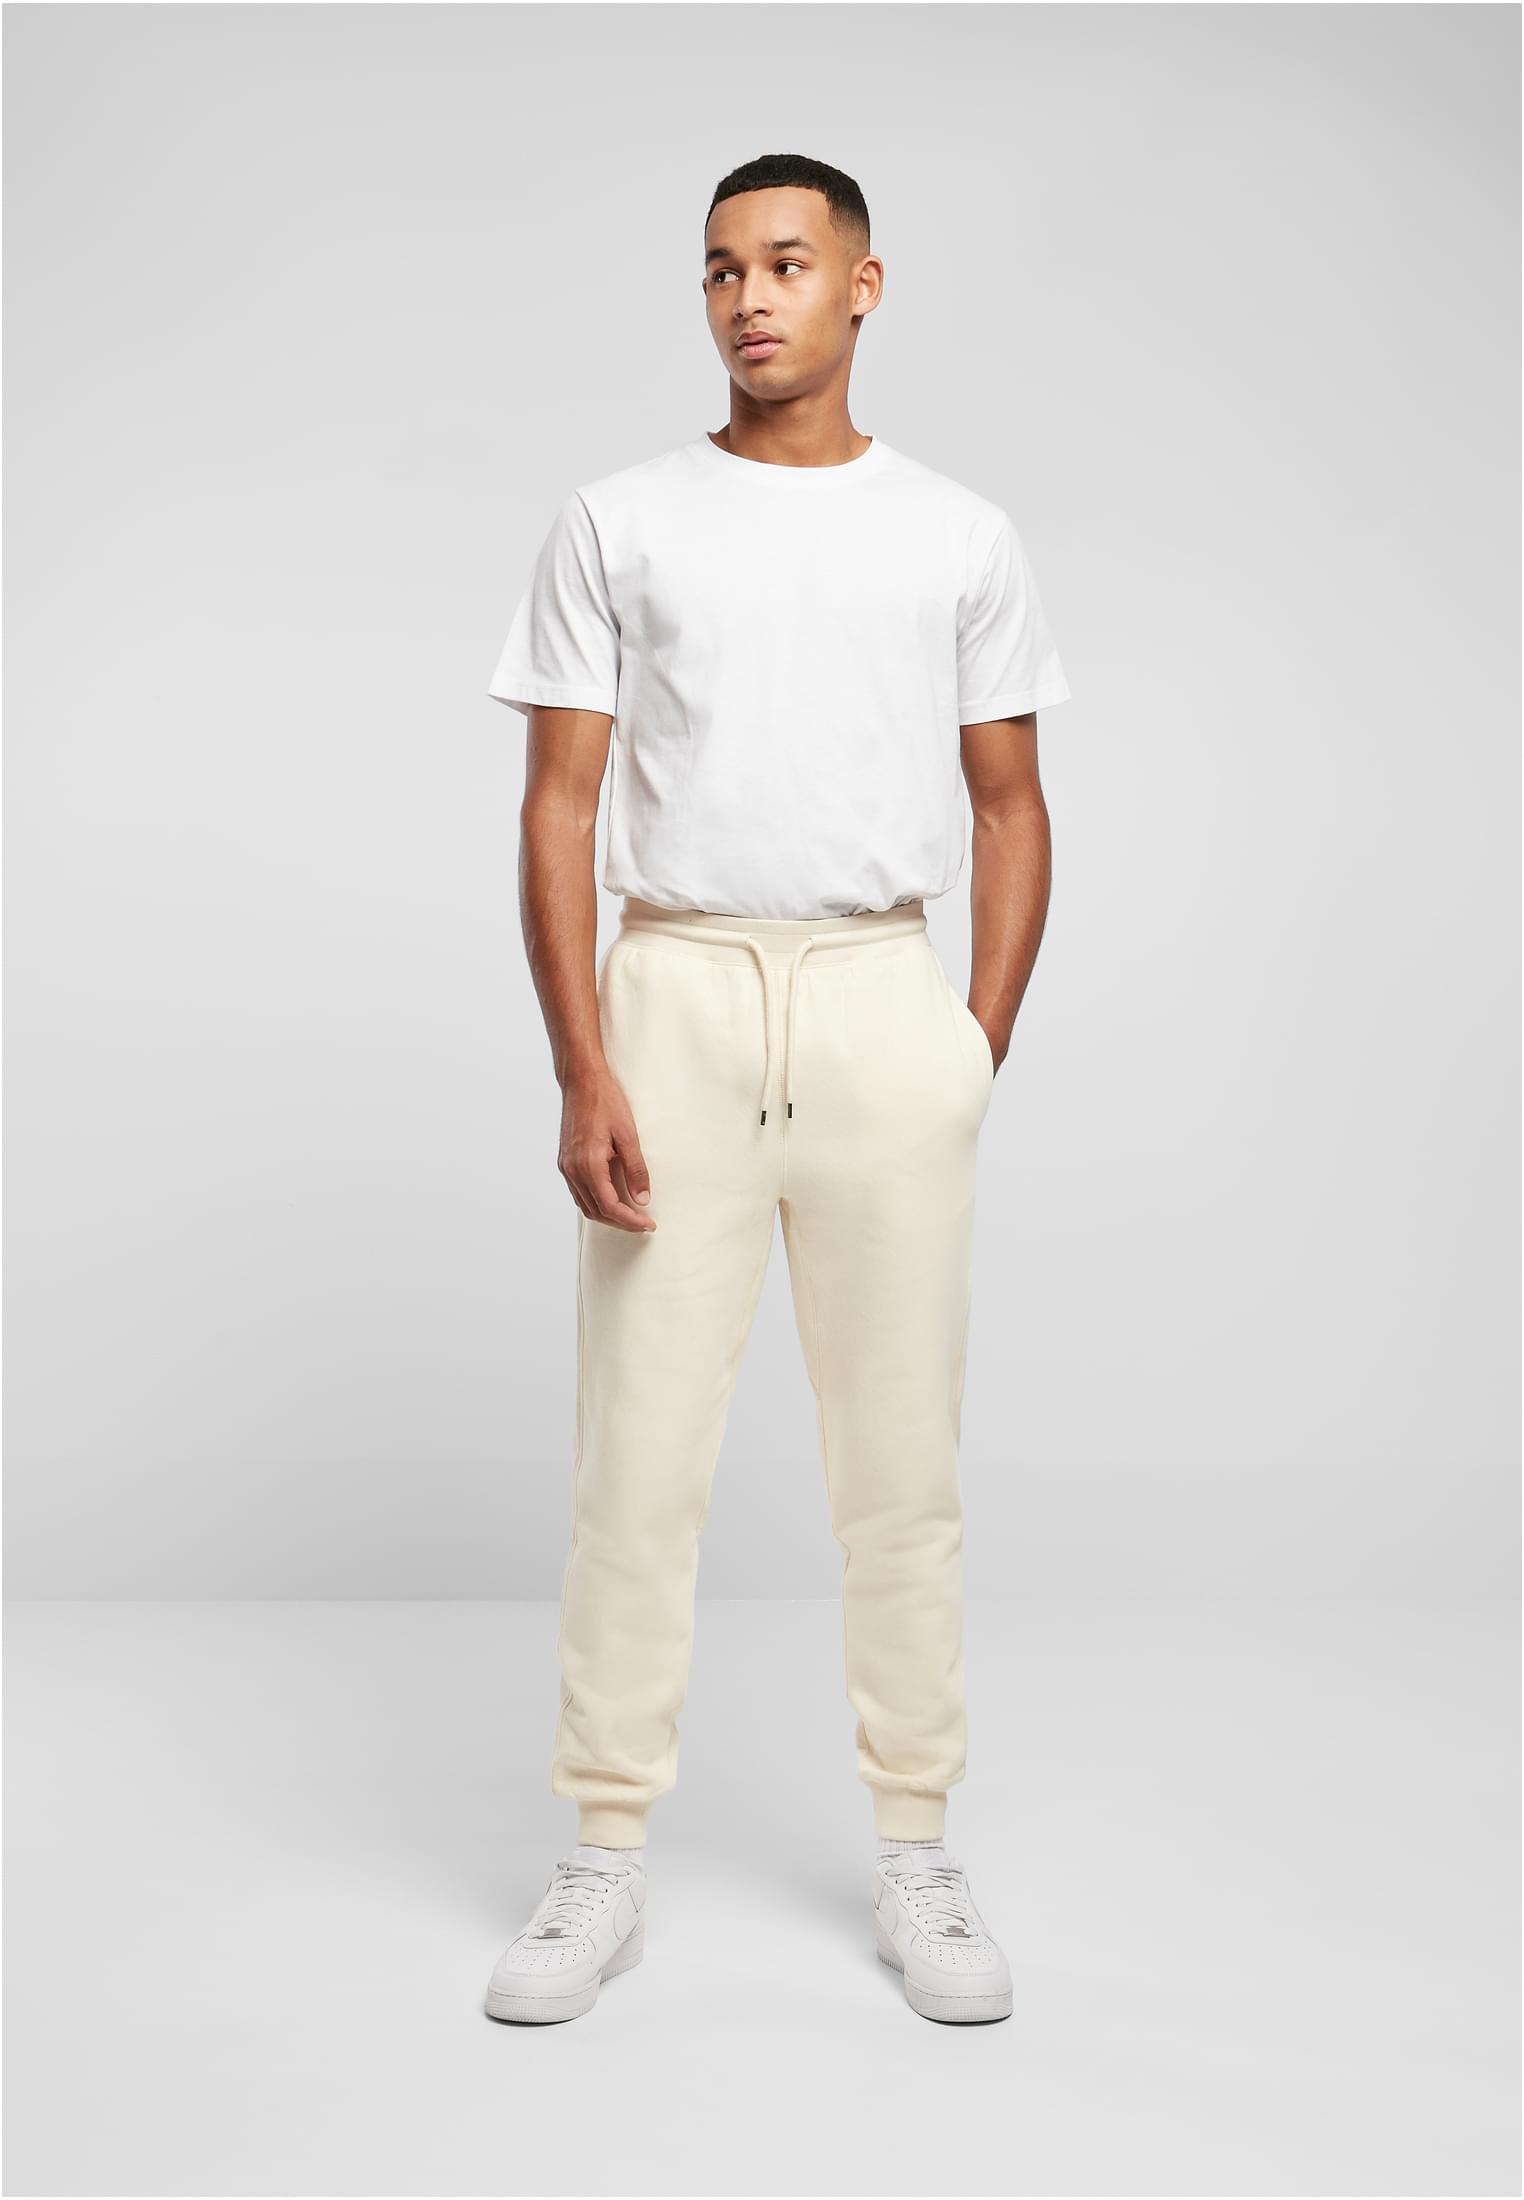 Herren Basic Sweatpants in Farbe whitesand